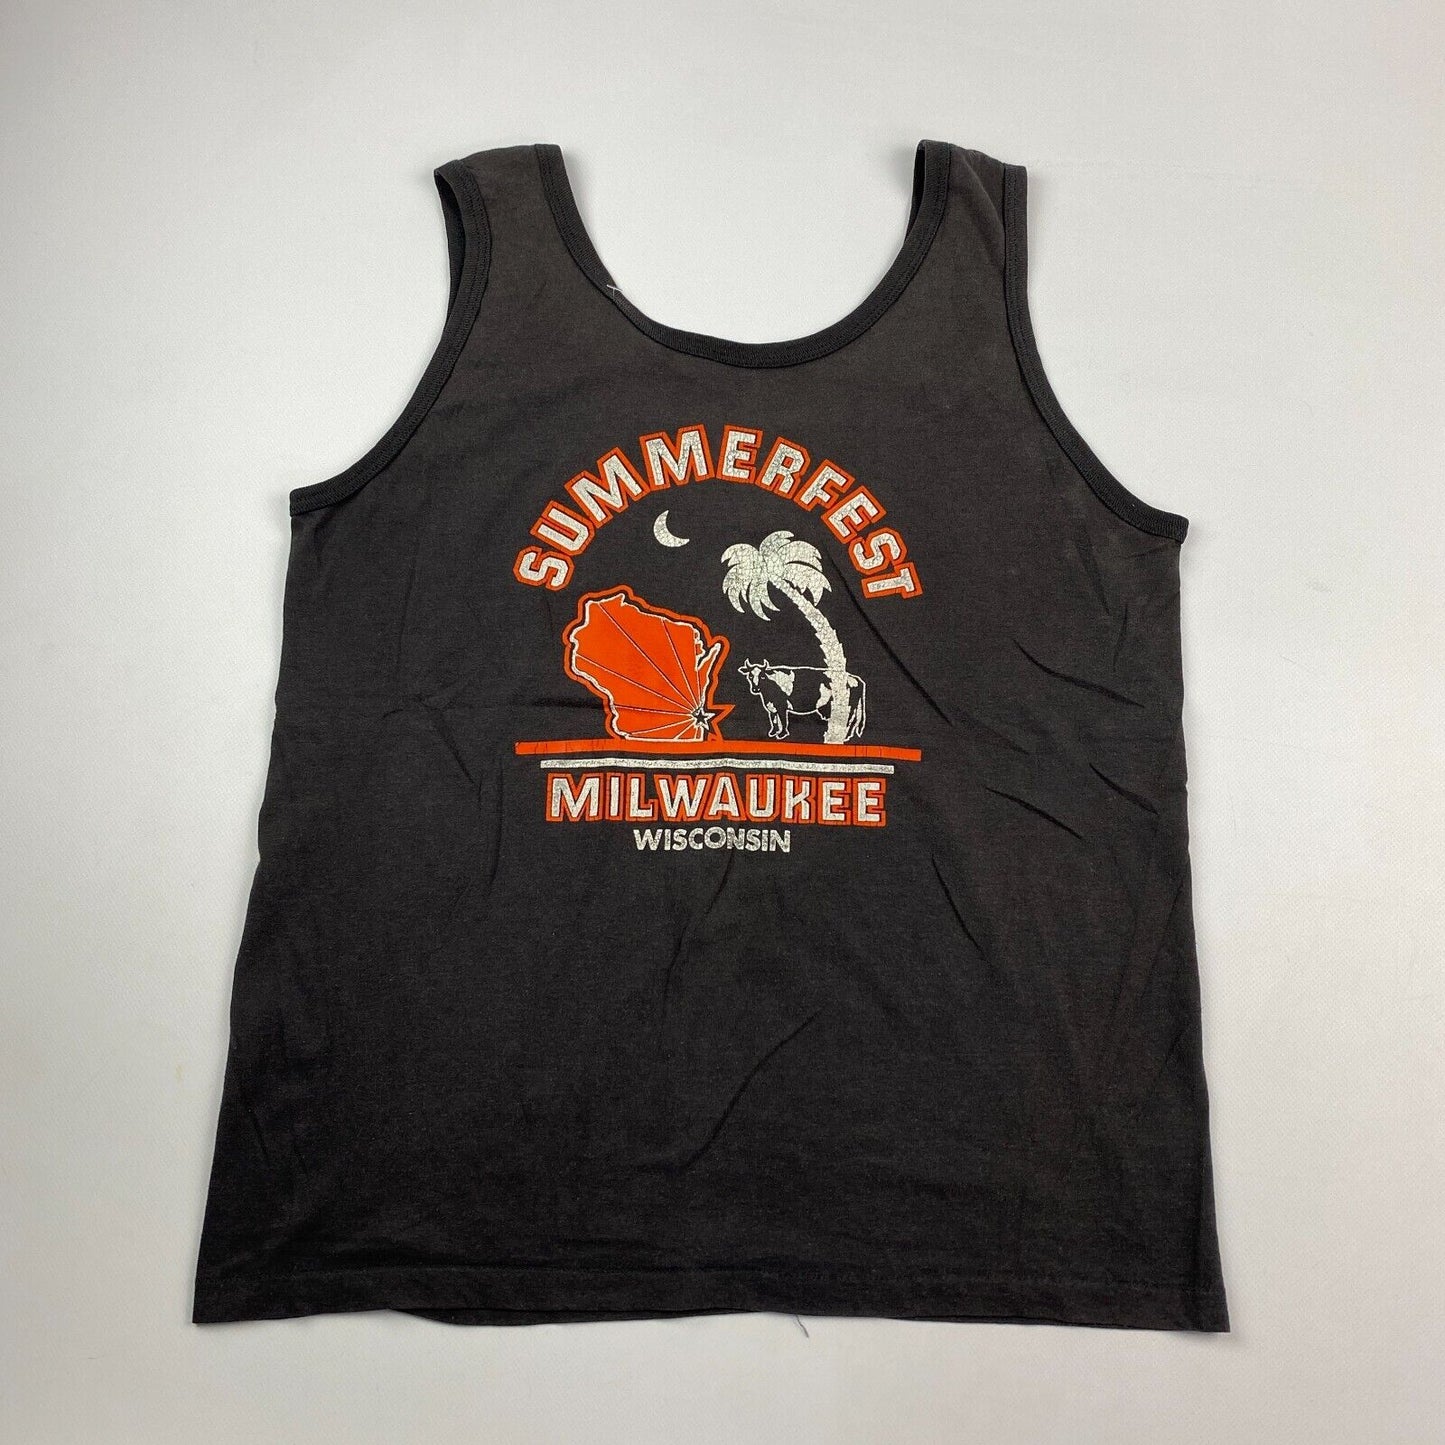 VINTAGE 90s Rock Stage Summerfest Biker Tank Sleeveless T-Shirt sz M Mens